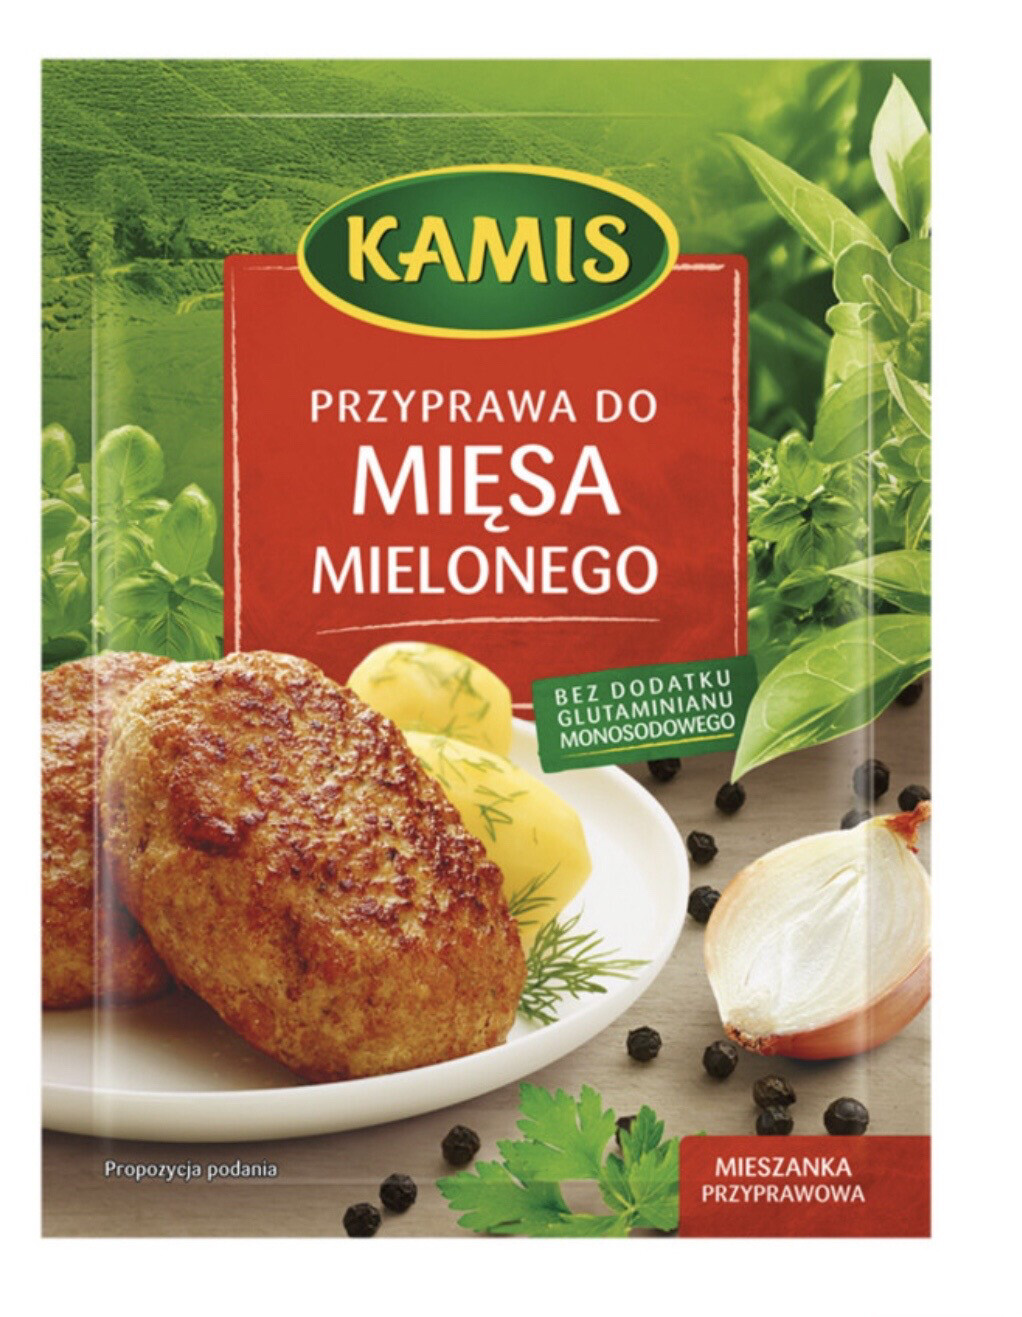 Przyprawa do Miesa Mielonego „Kamis” 20g. / Vegetable Seasoning